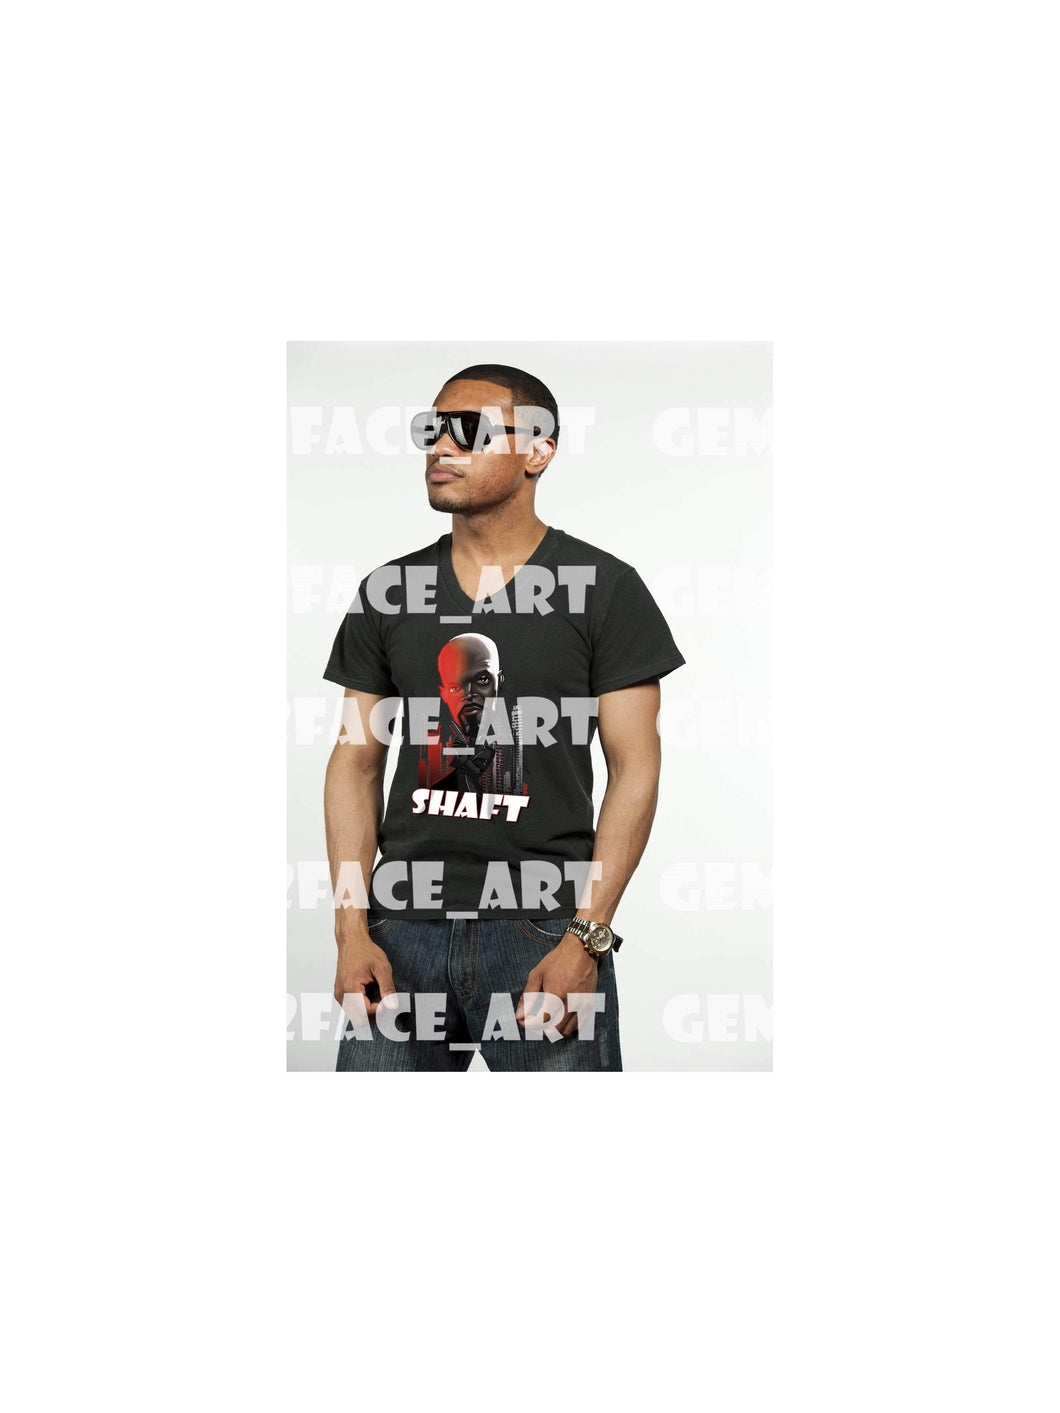 Shaft, Can You Dig It Shirt Gemini2face Art E-Store 